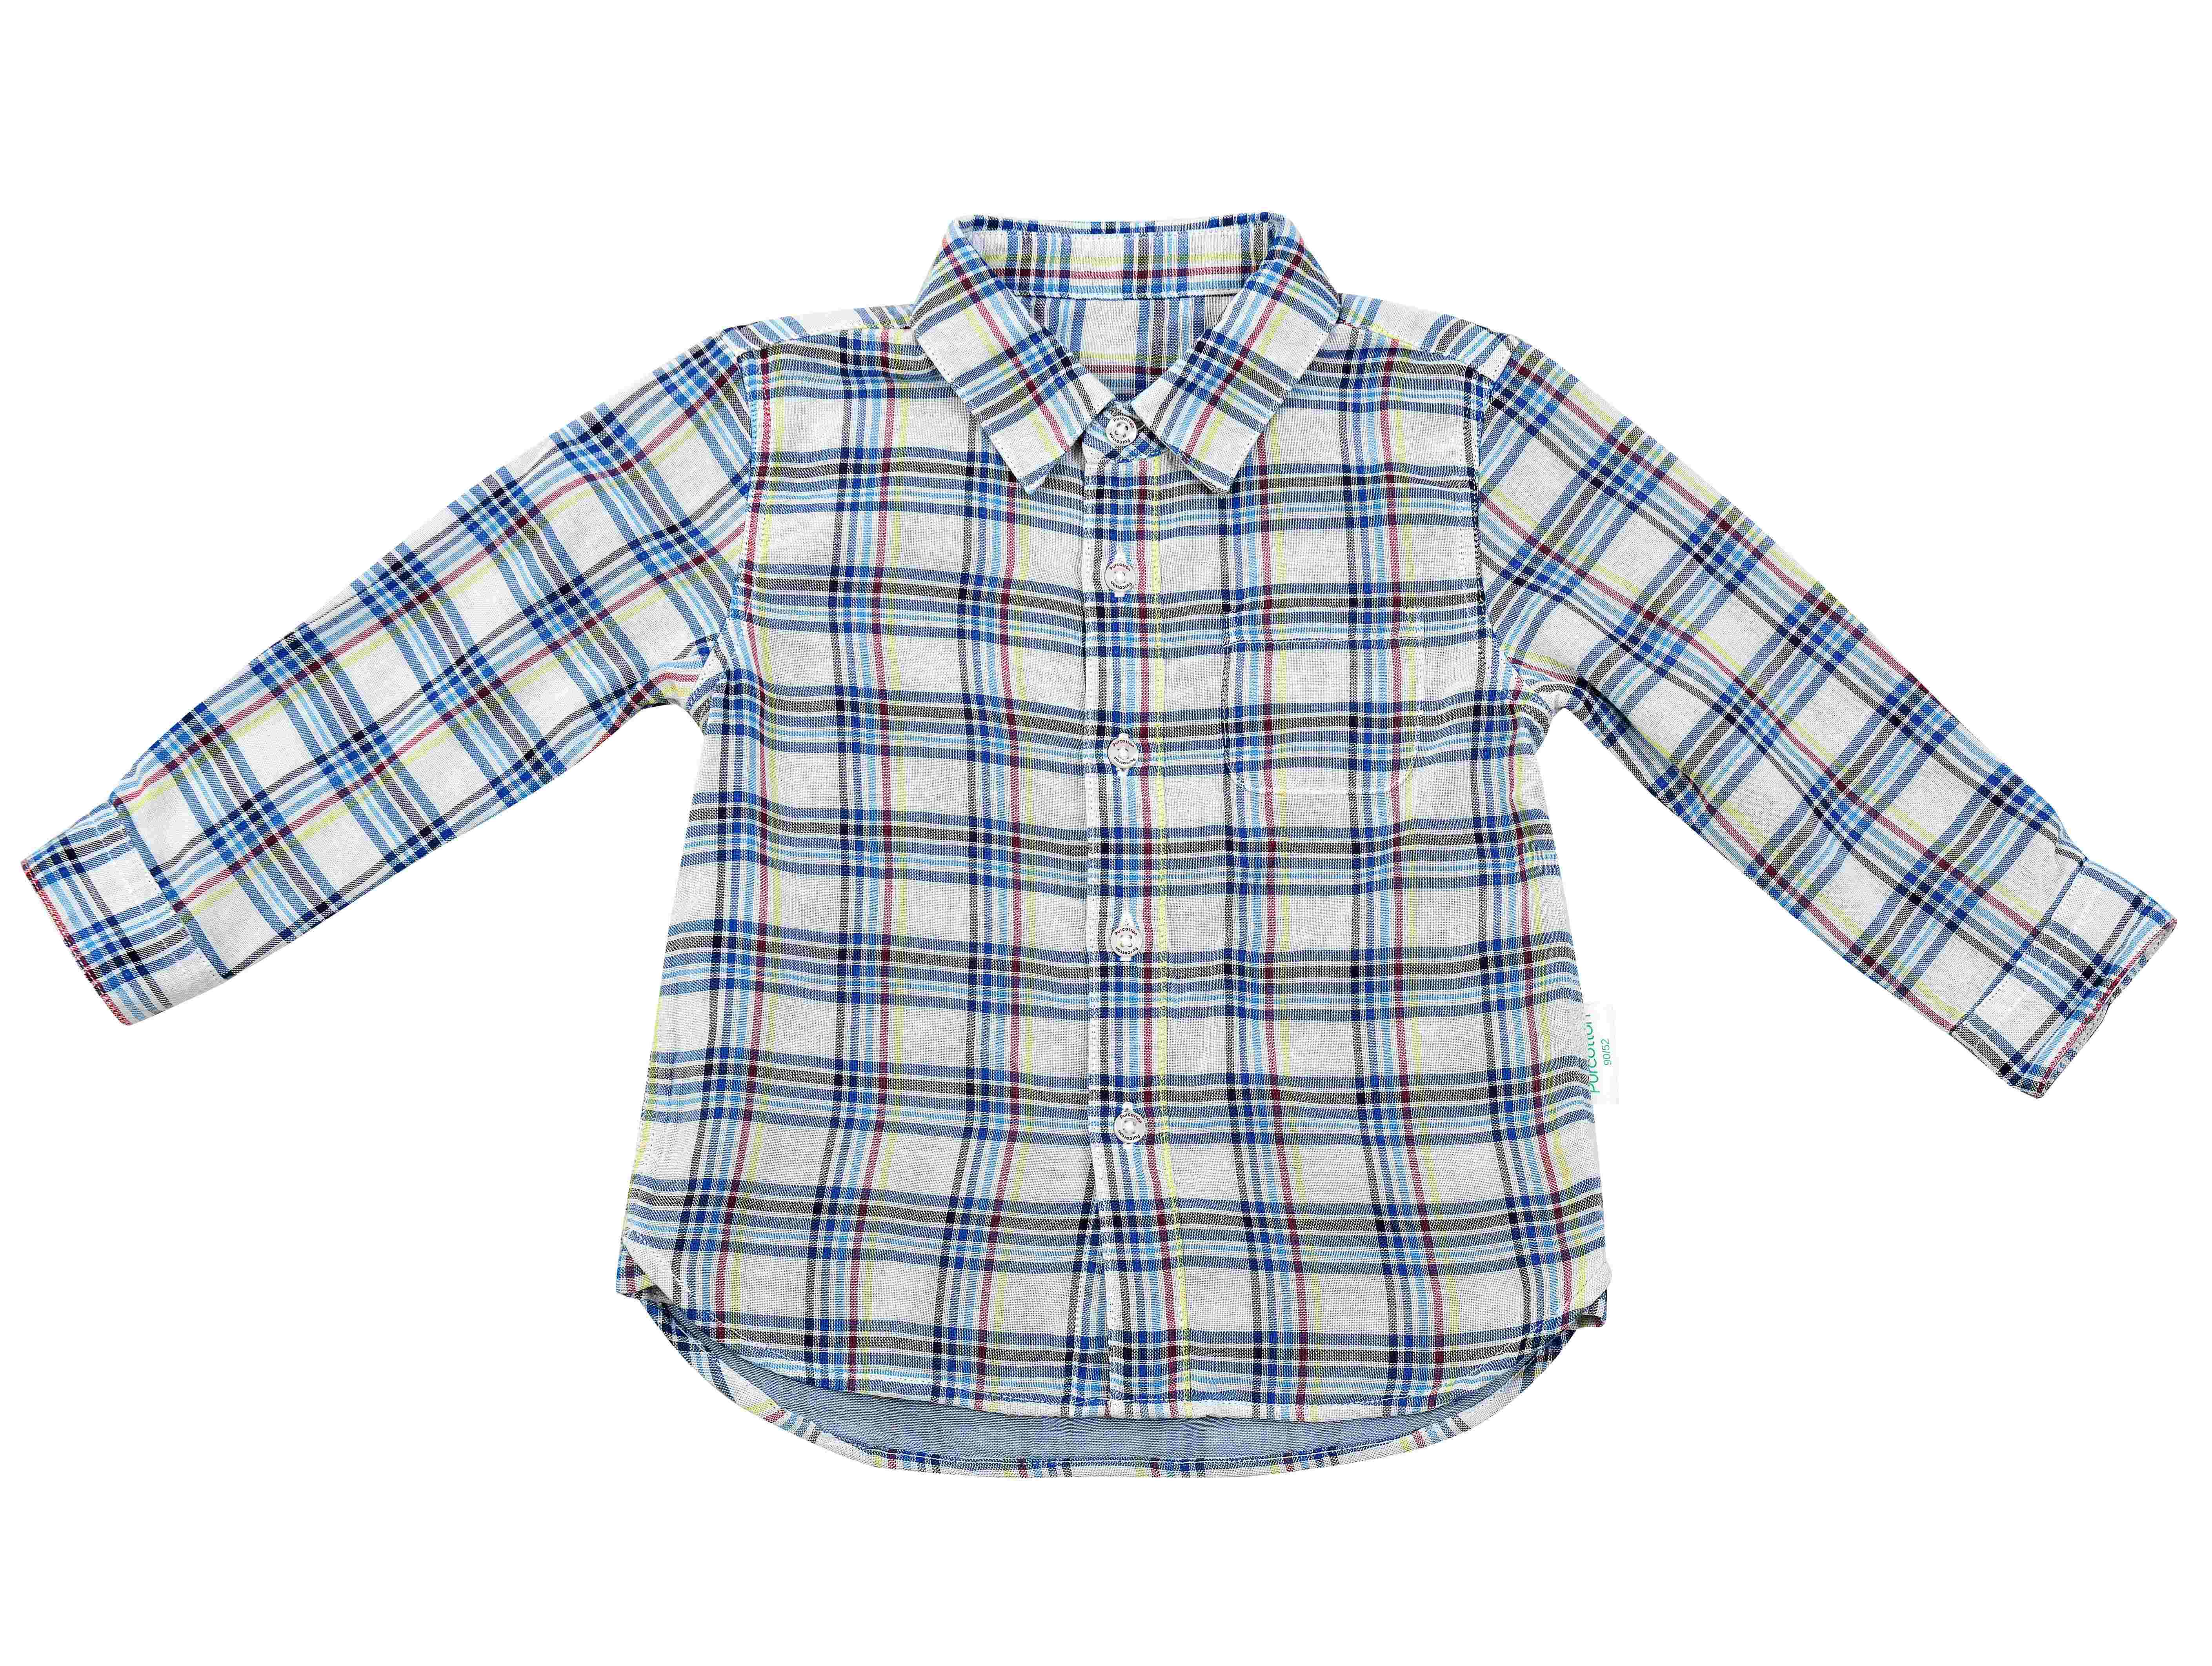 quality Little Girls'long-sleeved ruffled casual woven shirt